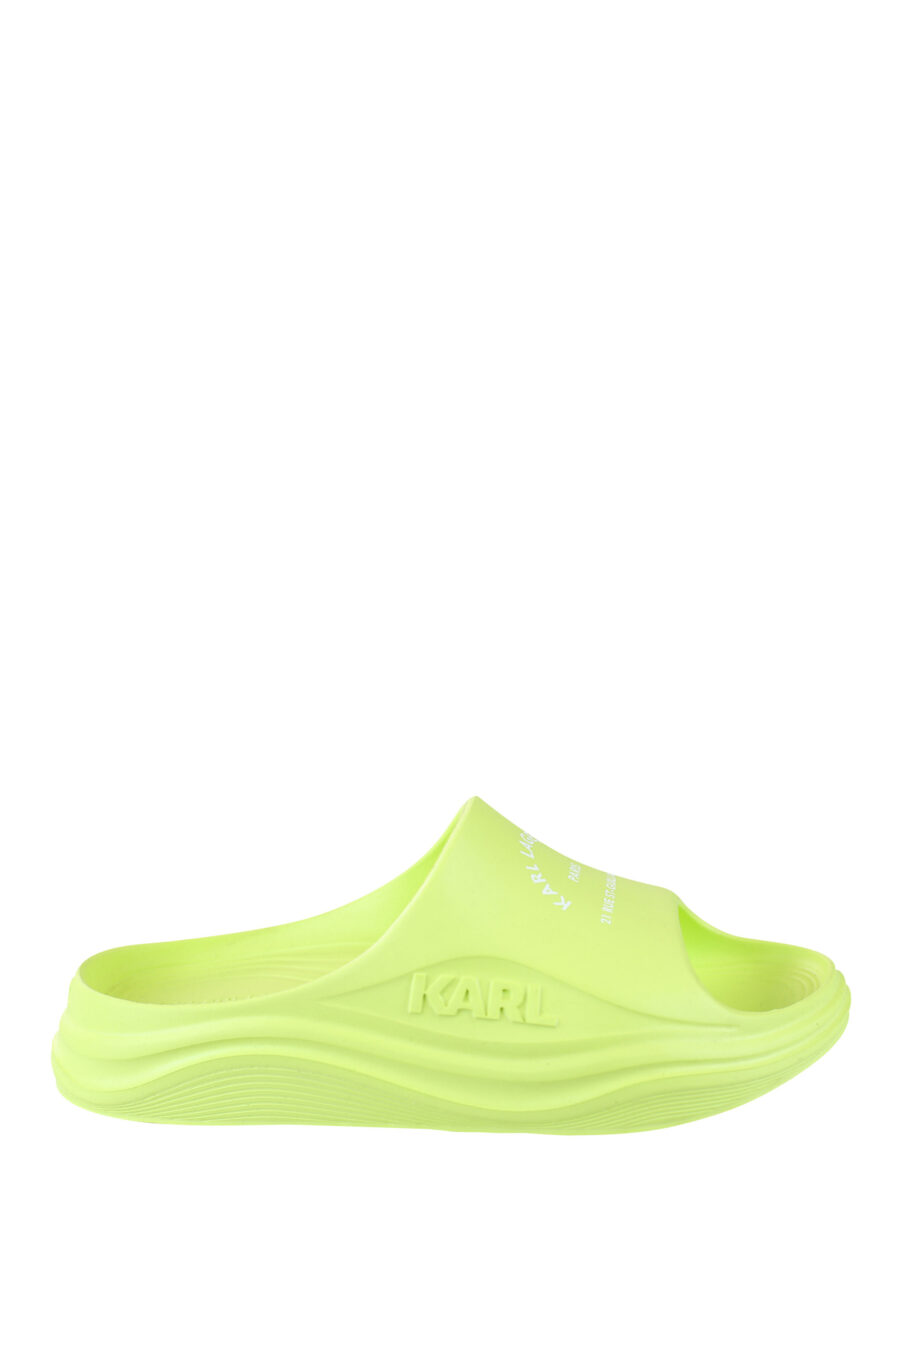 Green eco flip flops with monochrome logo - IMG 0045 1